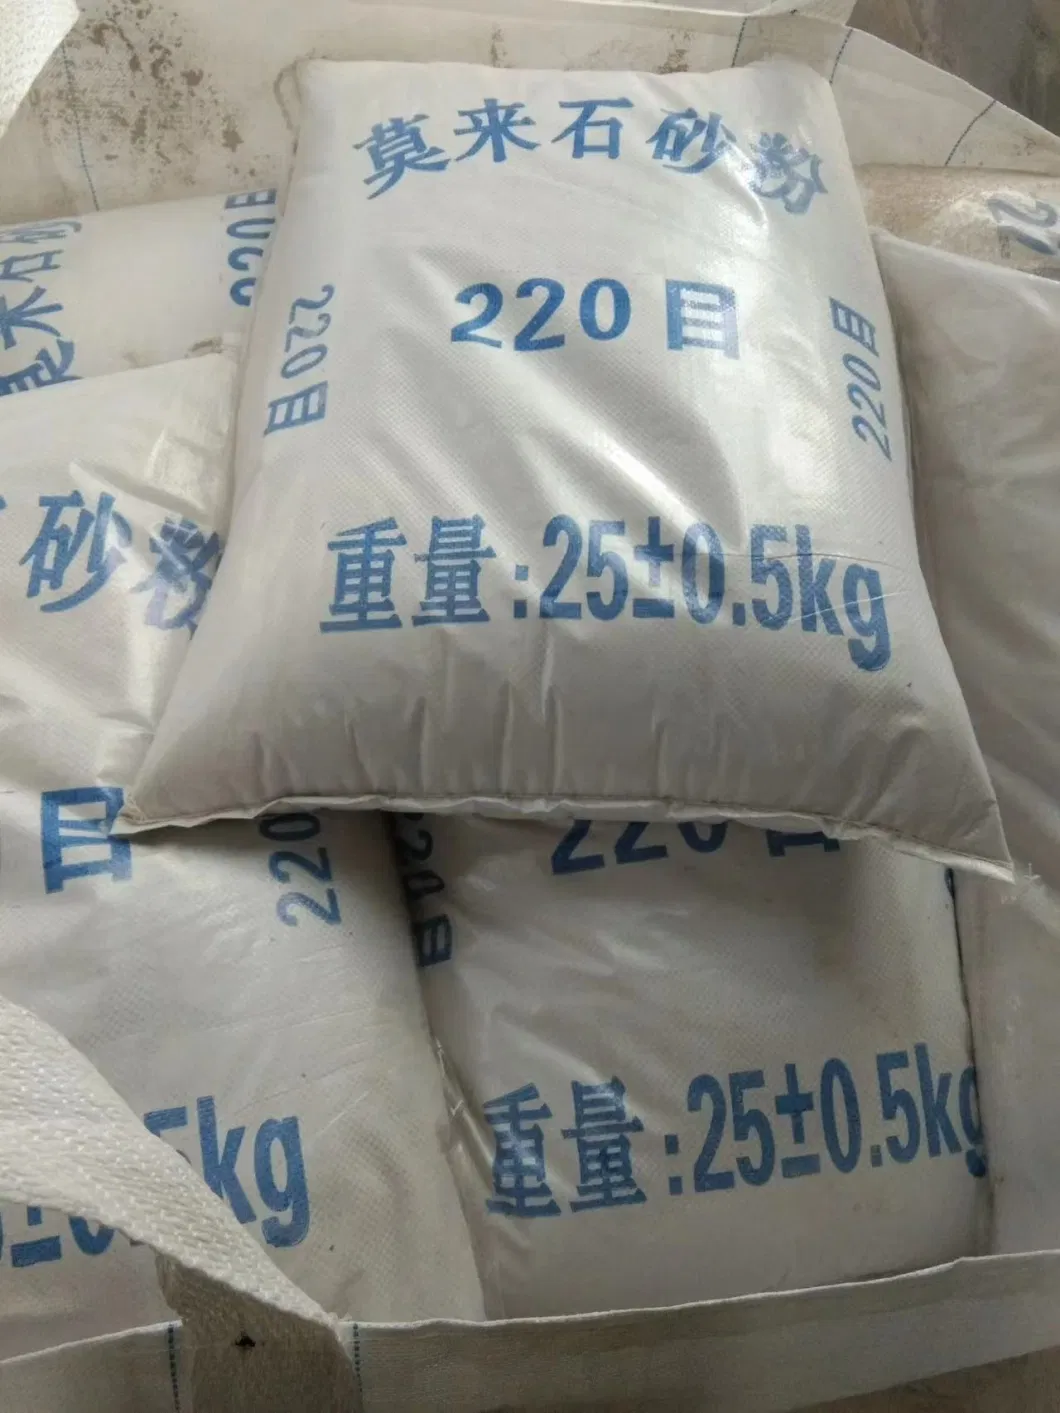 Mullite Powder, Mullite Sand, Zircon Sand, Zircon Powder Special for Precision Casting, 16-30mesh, 30-80mesh, 80-120mesh, 200mesh, 325mesh